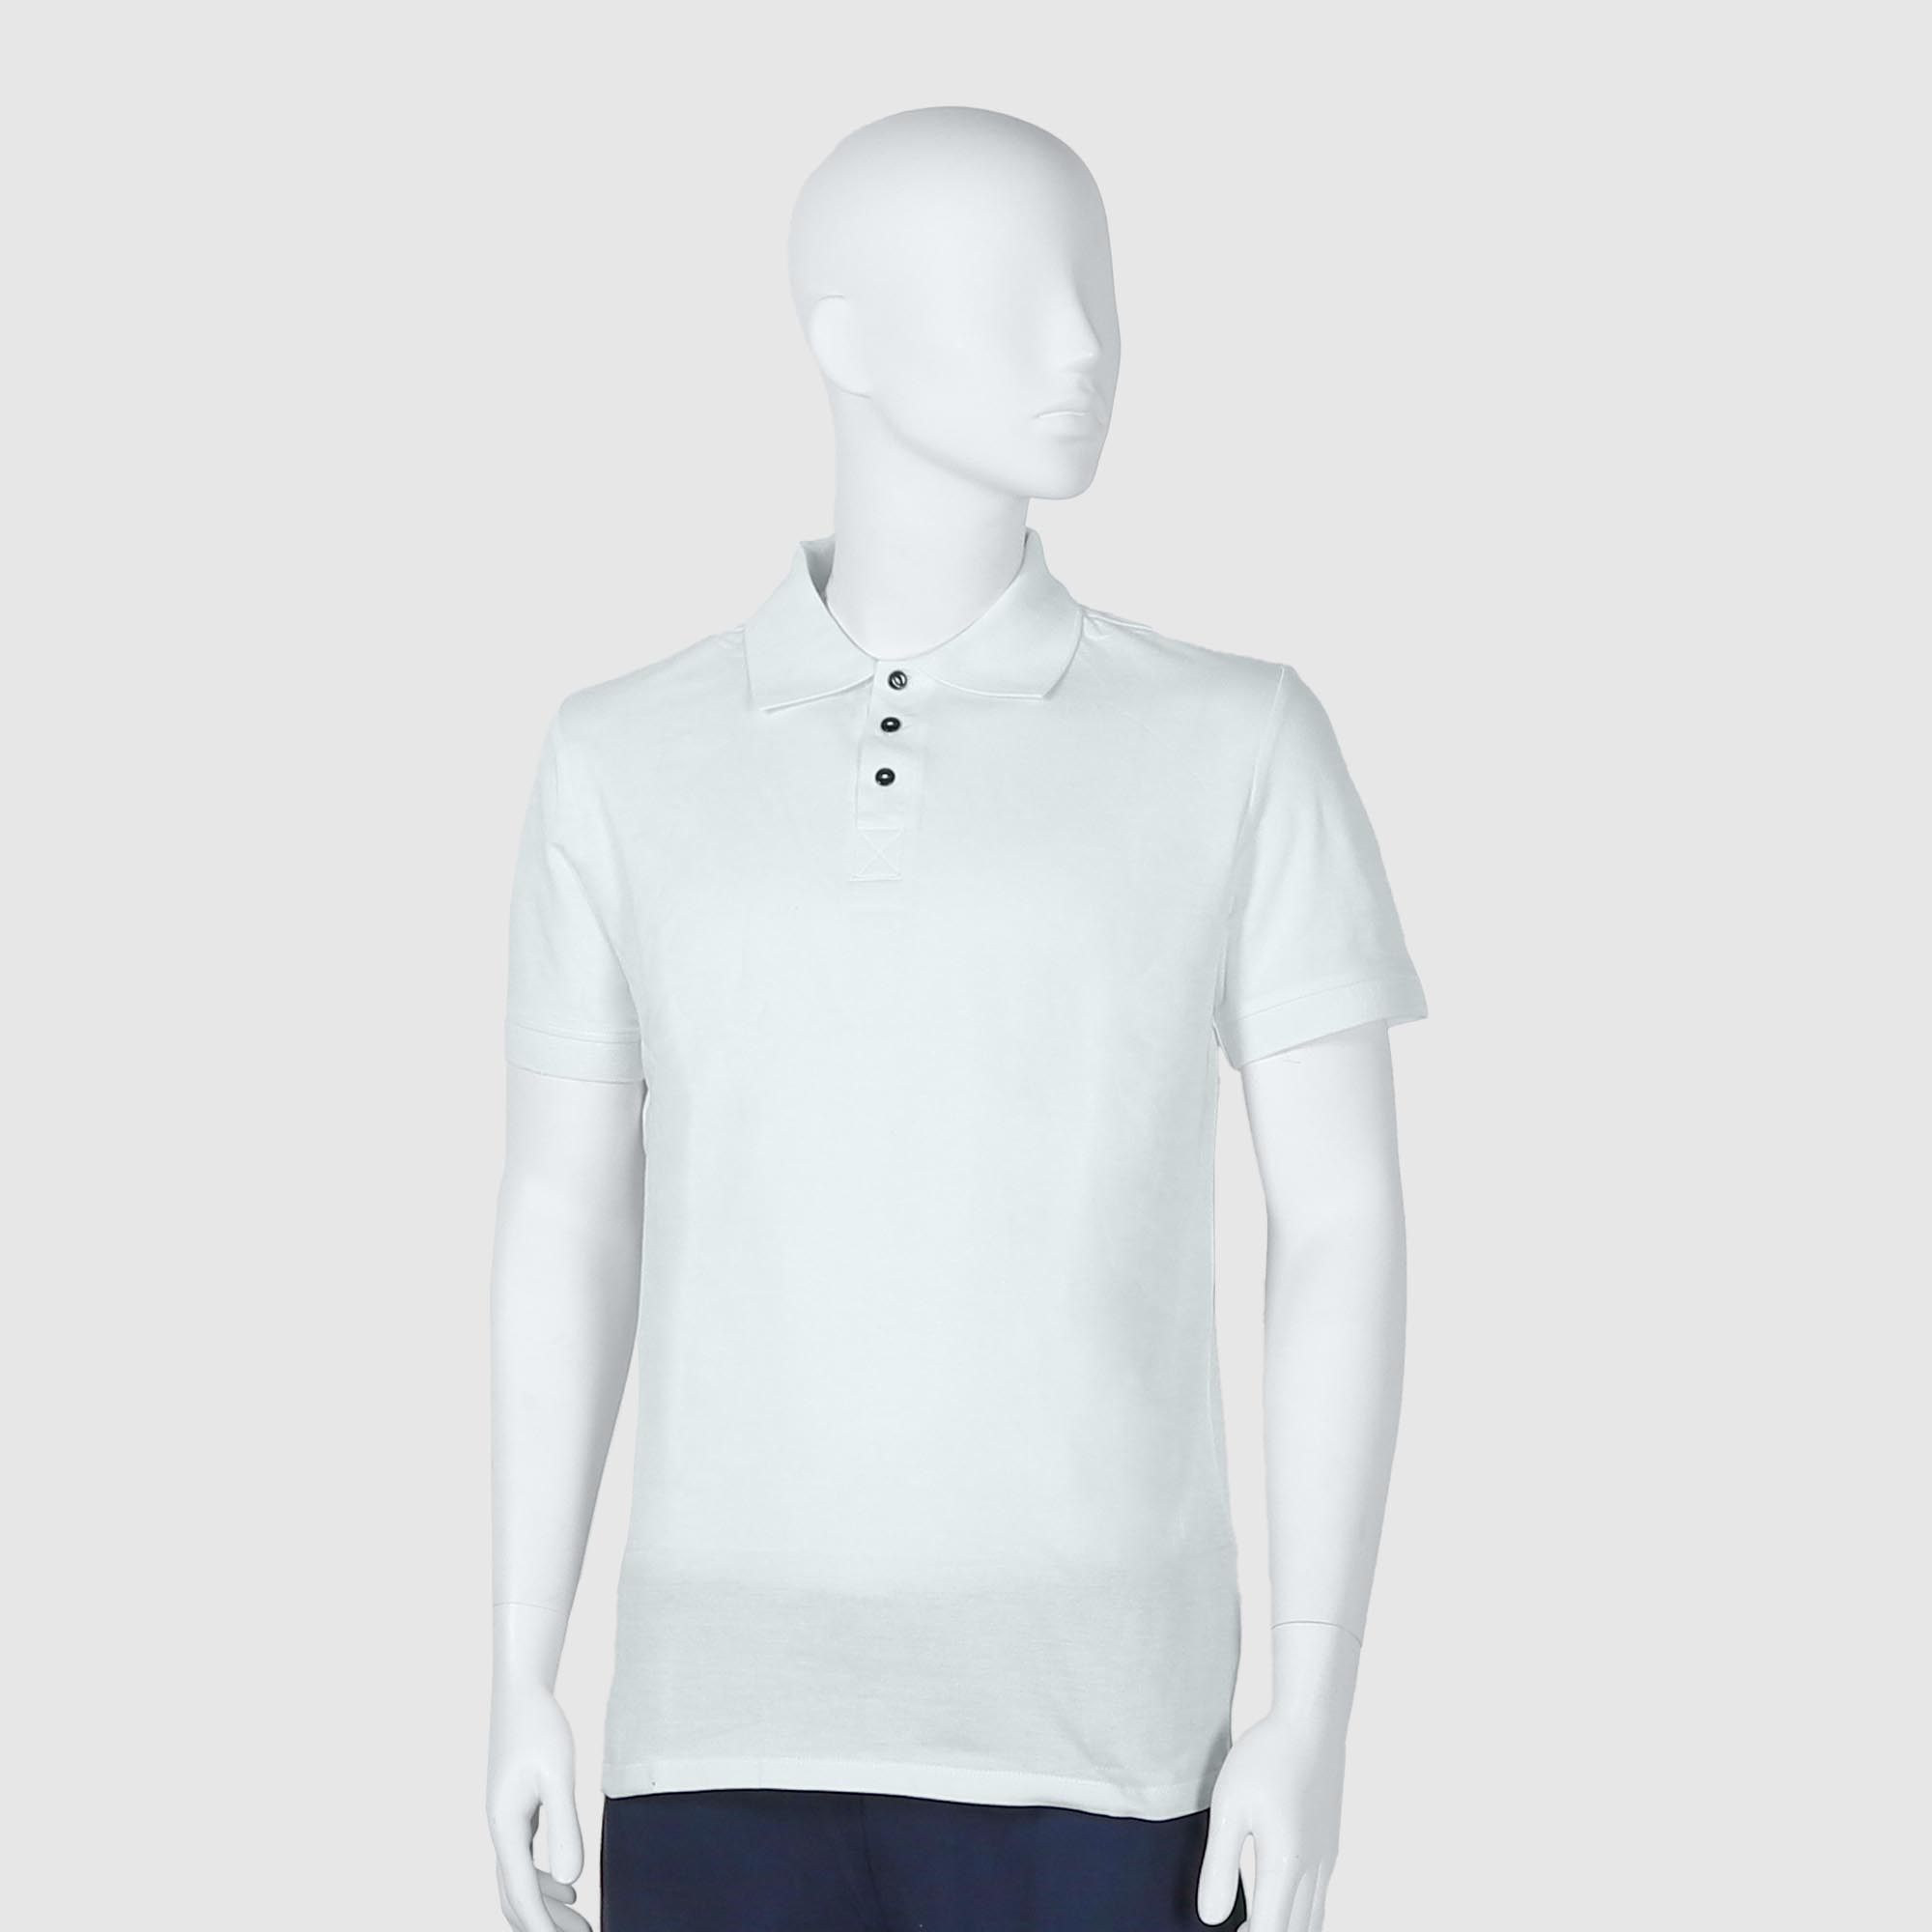 Мужская футболка-поло Diva Teks белая (DTD-07), цвет белый, размер 52-54